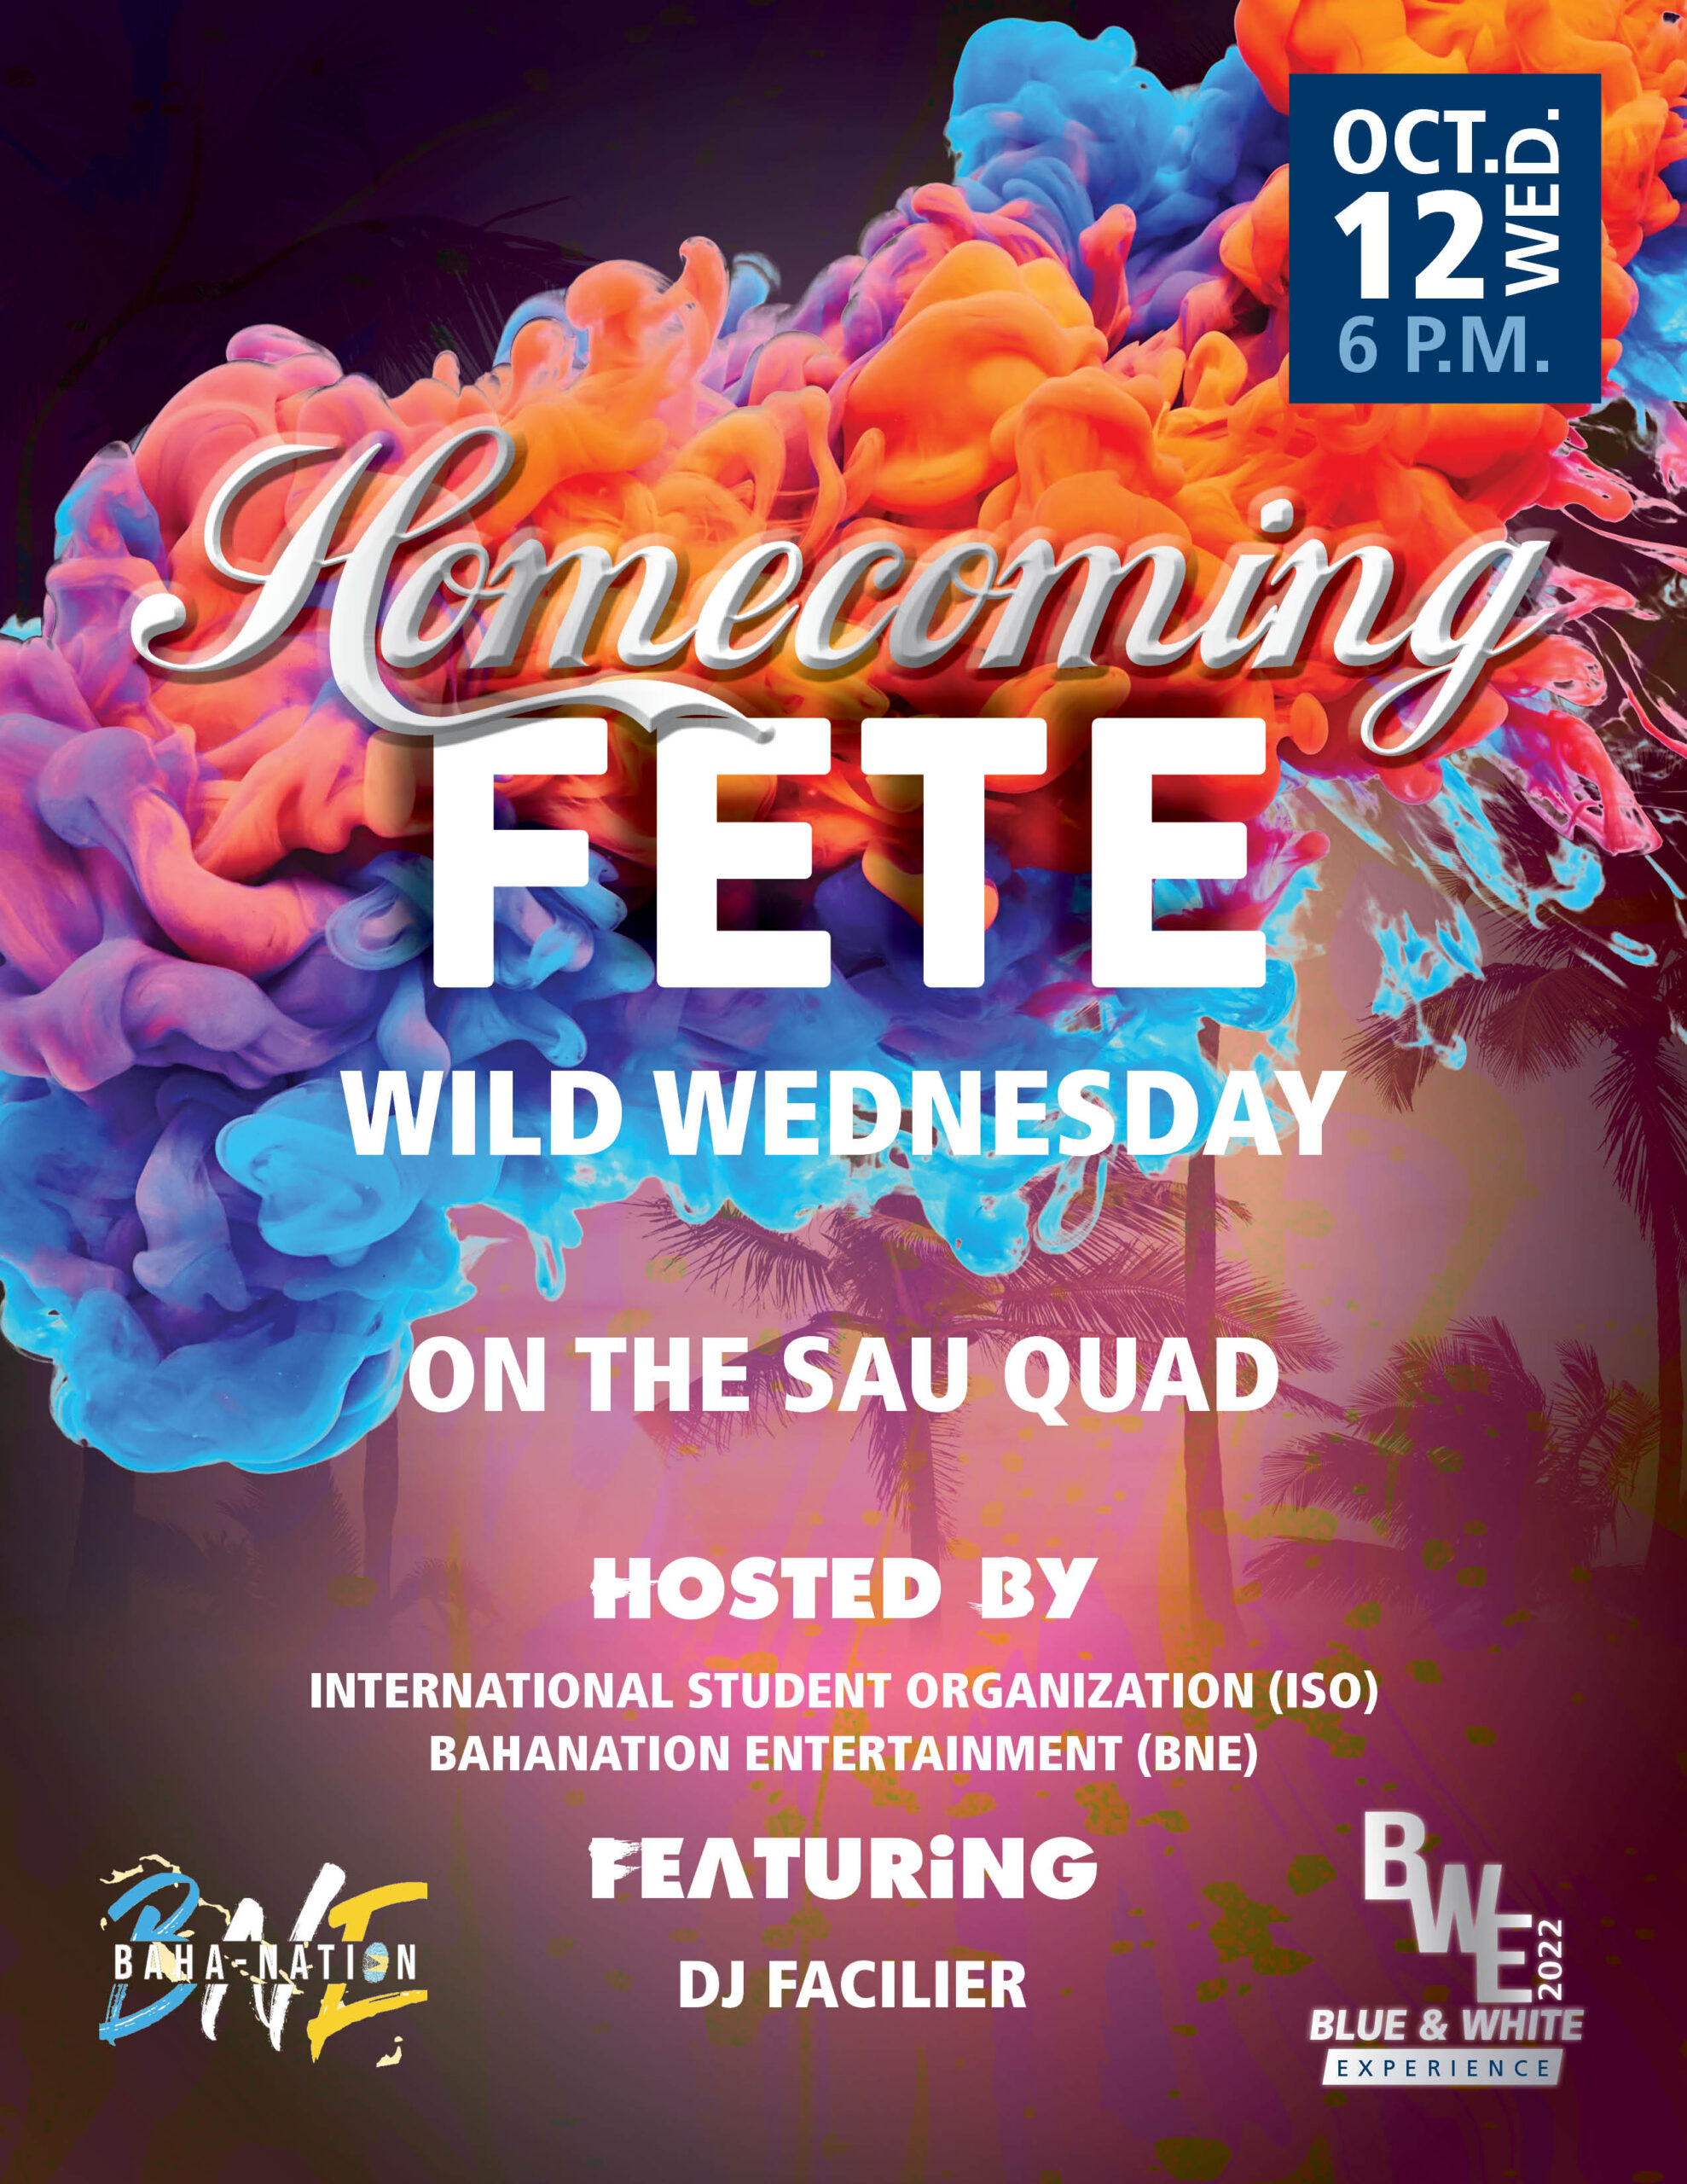 Wild Wednesday Fete Saint Augustine's University